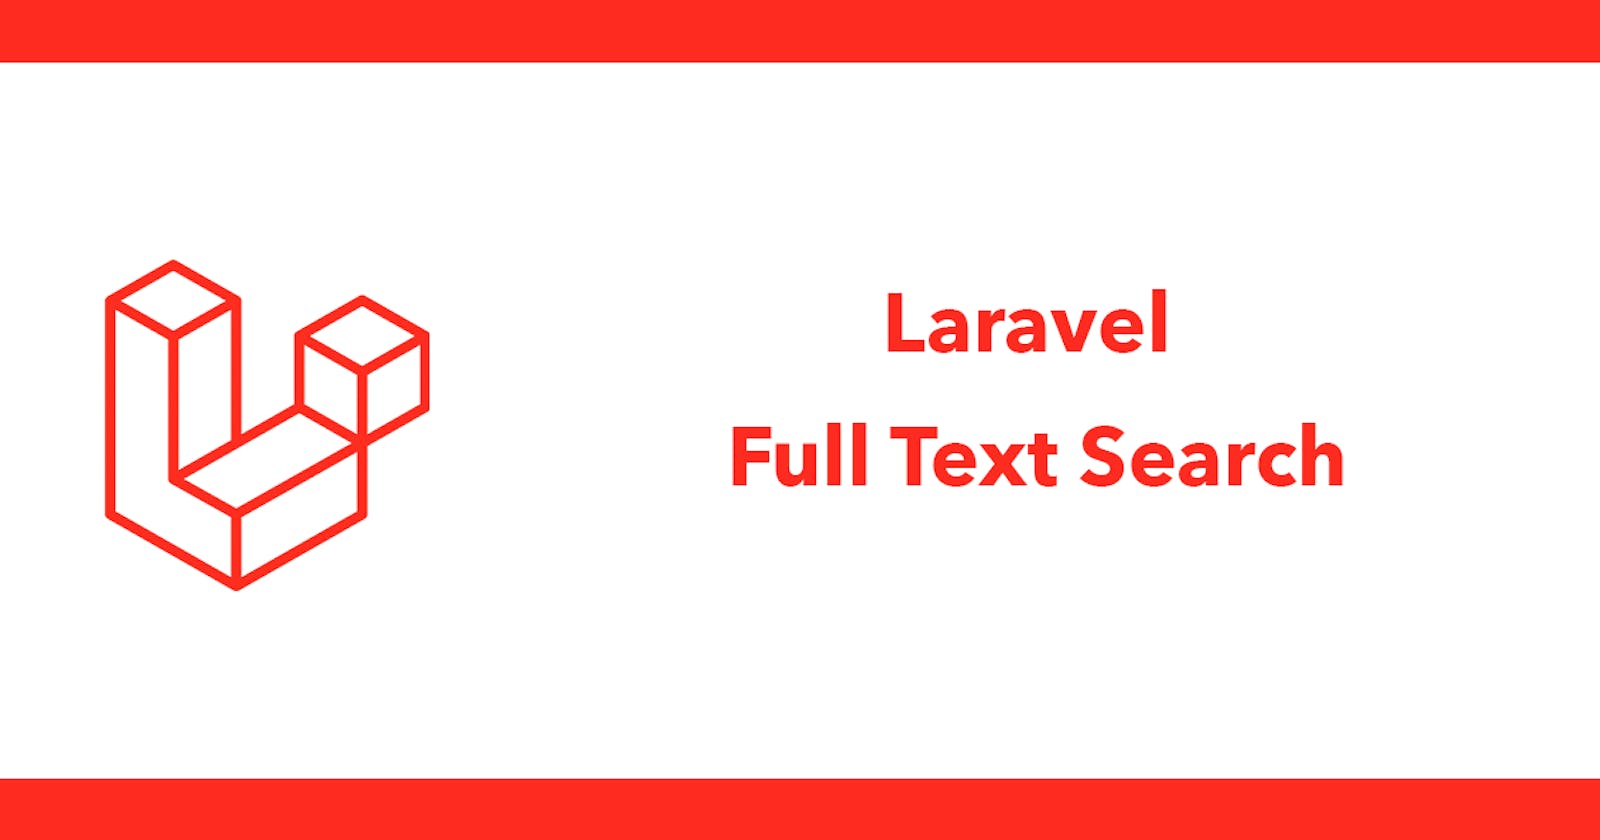 Laravel Full Text Search